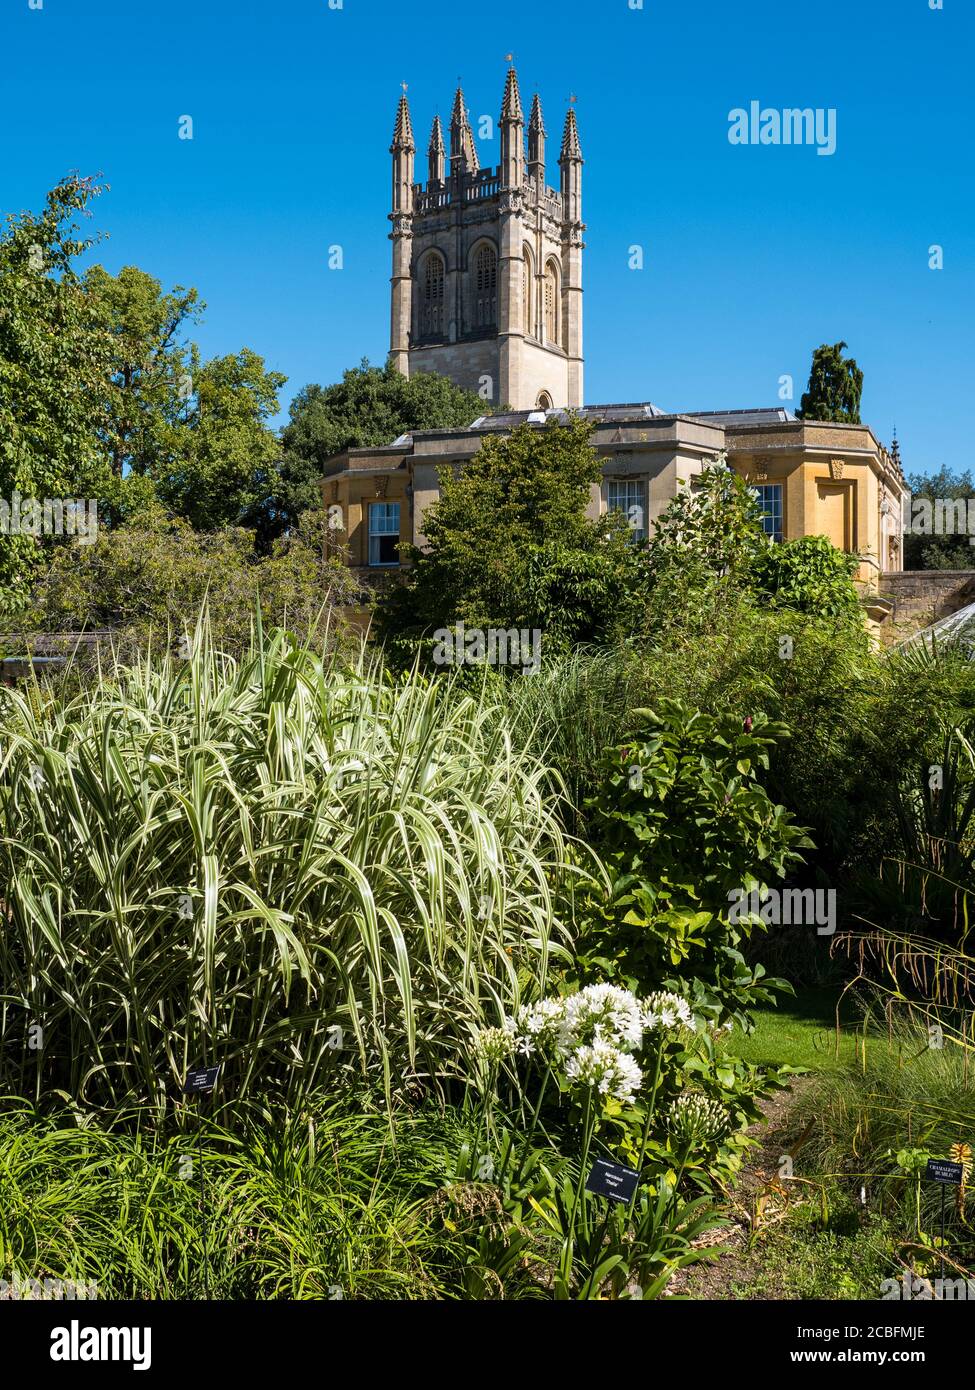 University of Oxford Botanical Gardens, mit Magdalen Tower, Oxford Landmark, Oxford, Oxfordshire, England, Großbritannien, GB. Stockfoto